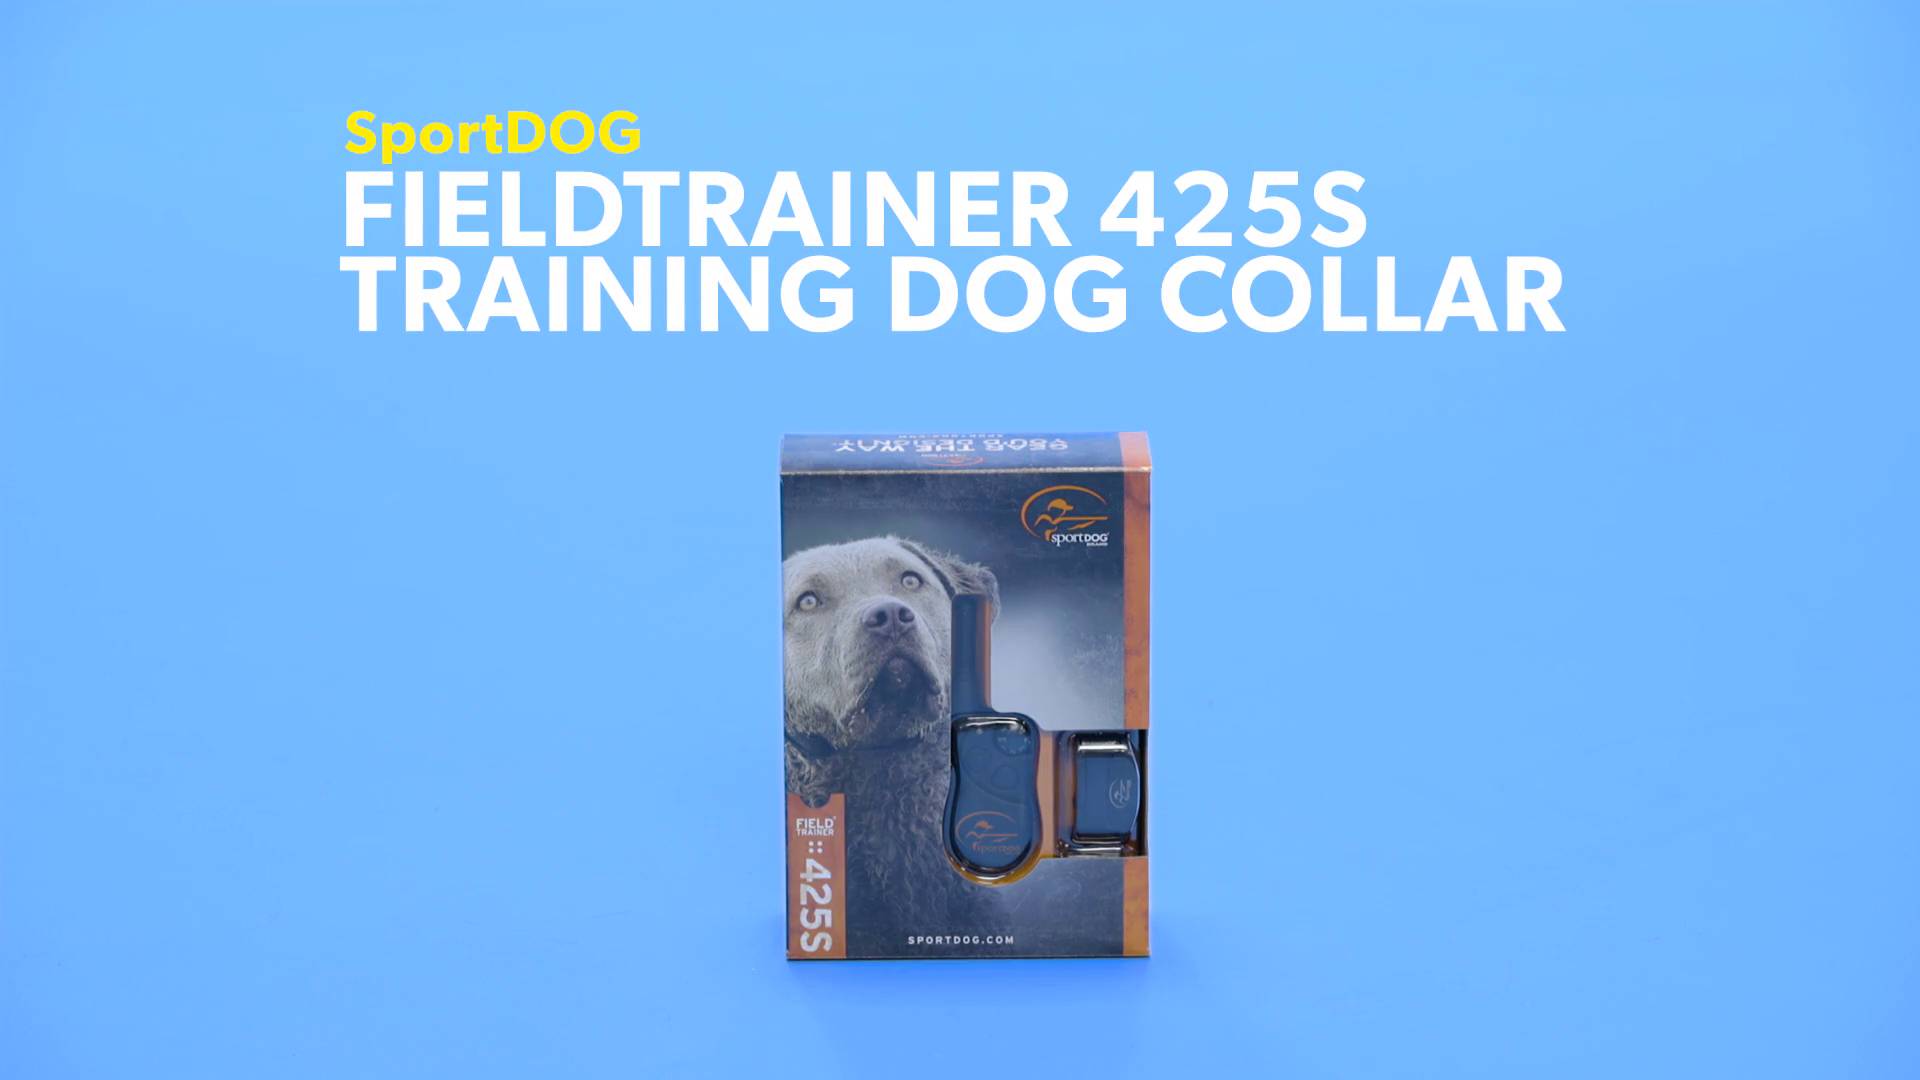 sportdog 425 training video